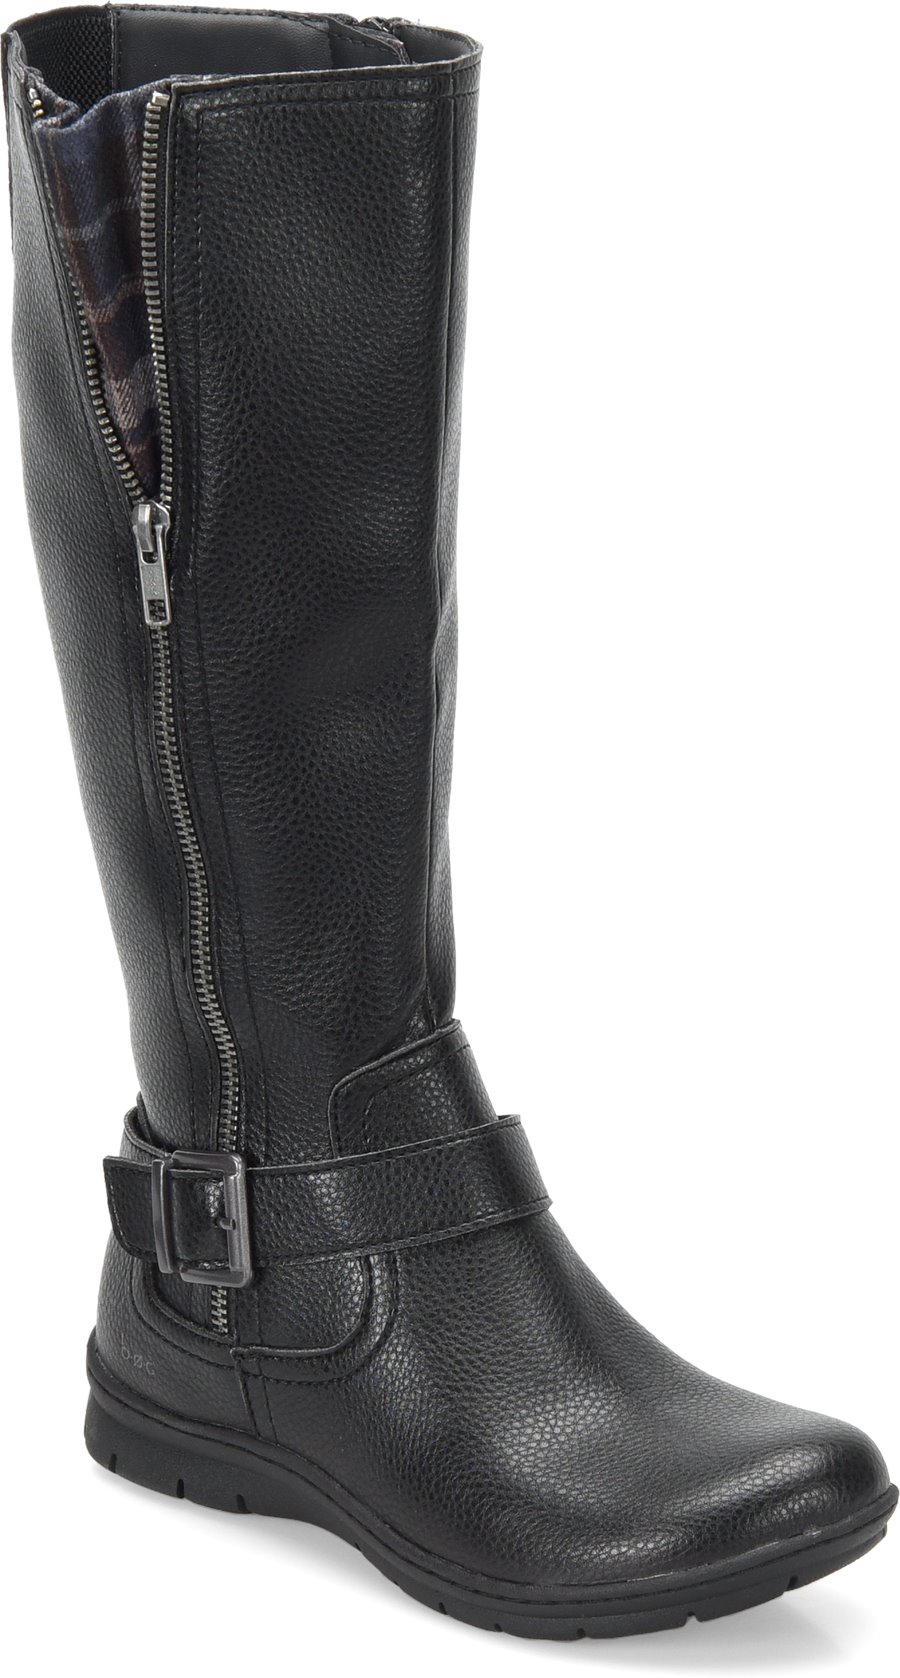 BOC Pauline in Black - BOC Womens Boots on Shoeline.com